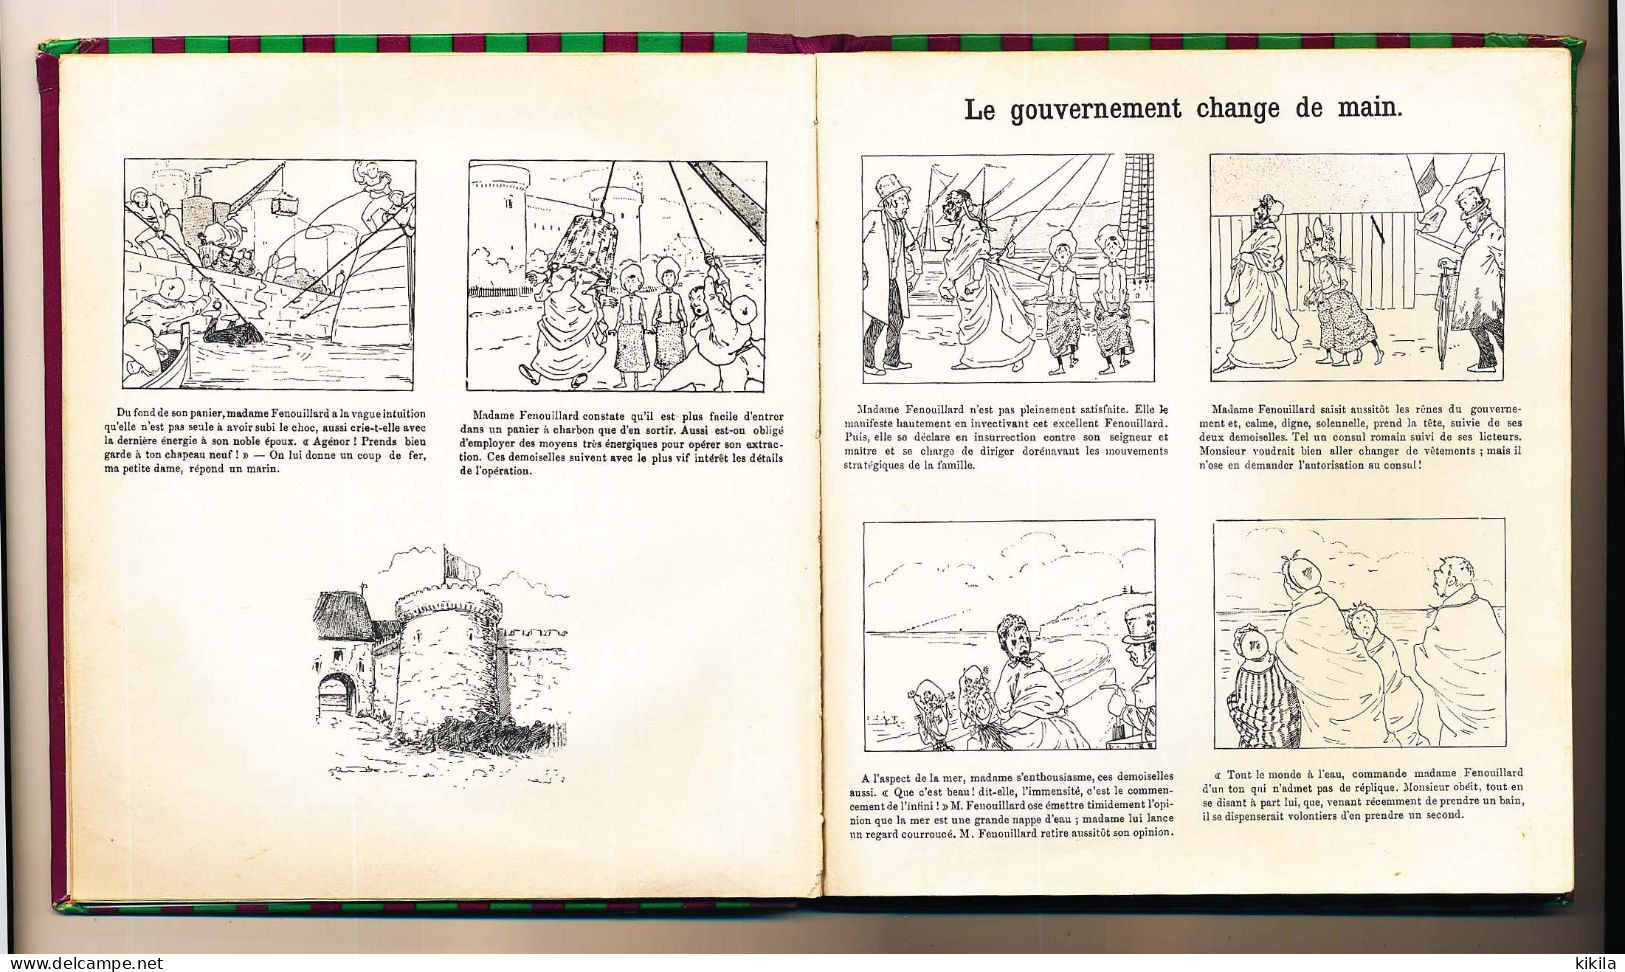 Livre De Christophe LA FAMILLE FENOUILLARD  Aux Editions Armand Colin Imprimé En 1961 - Otros & Sin Clasificación